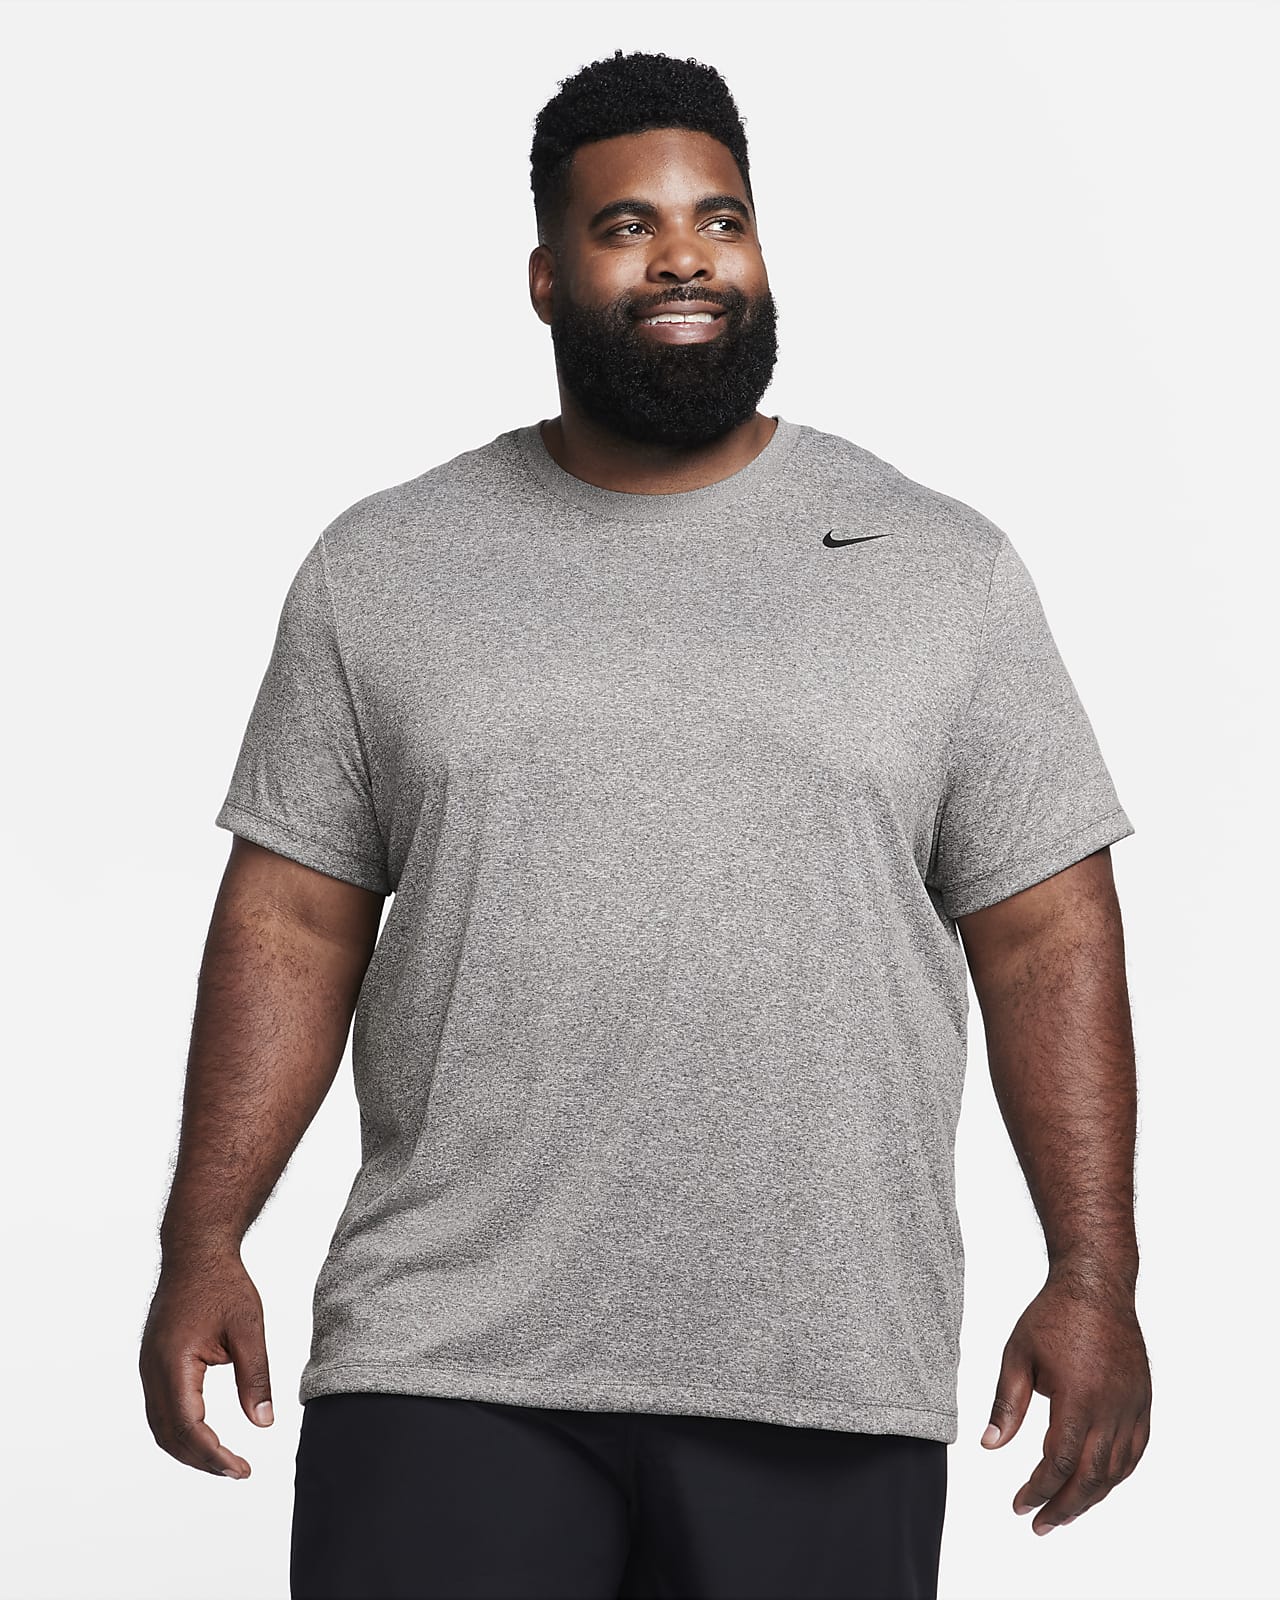 en voz alta Final Con Nike Dri-FIT Legend Men's Fitness T-Shirt. Nike.com